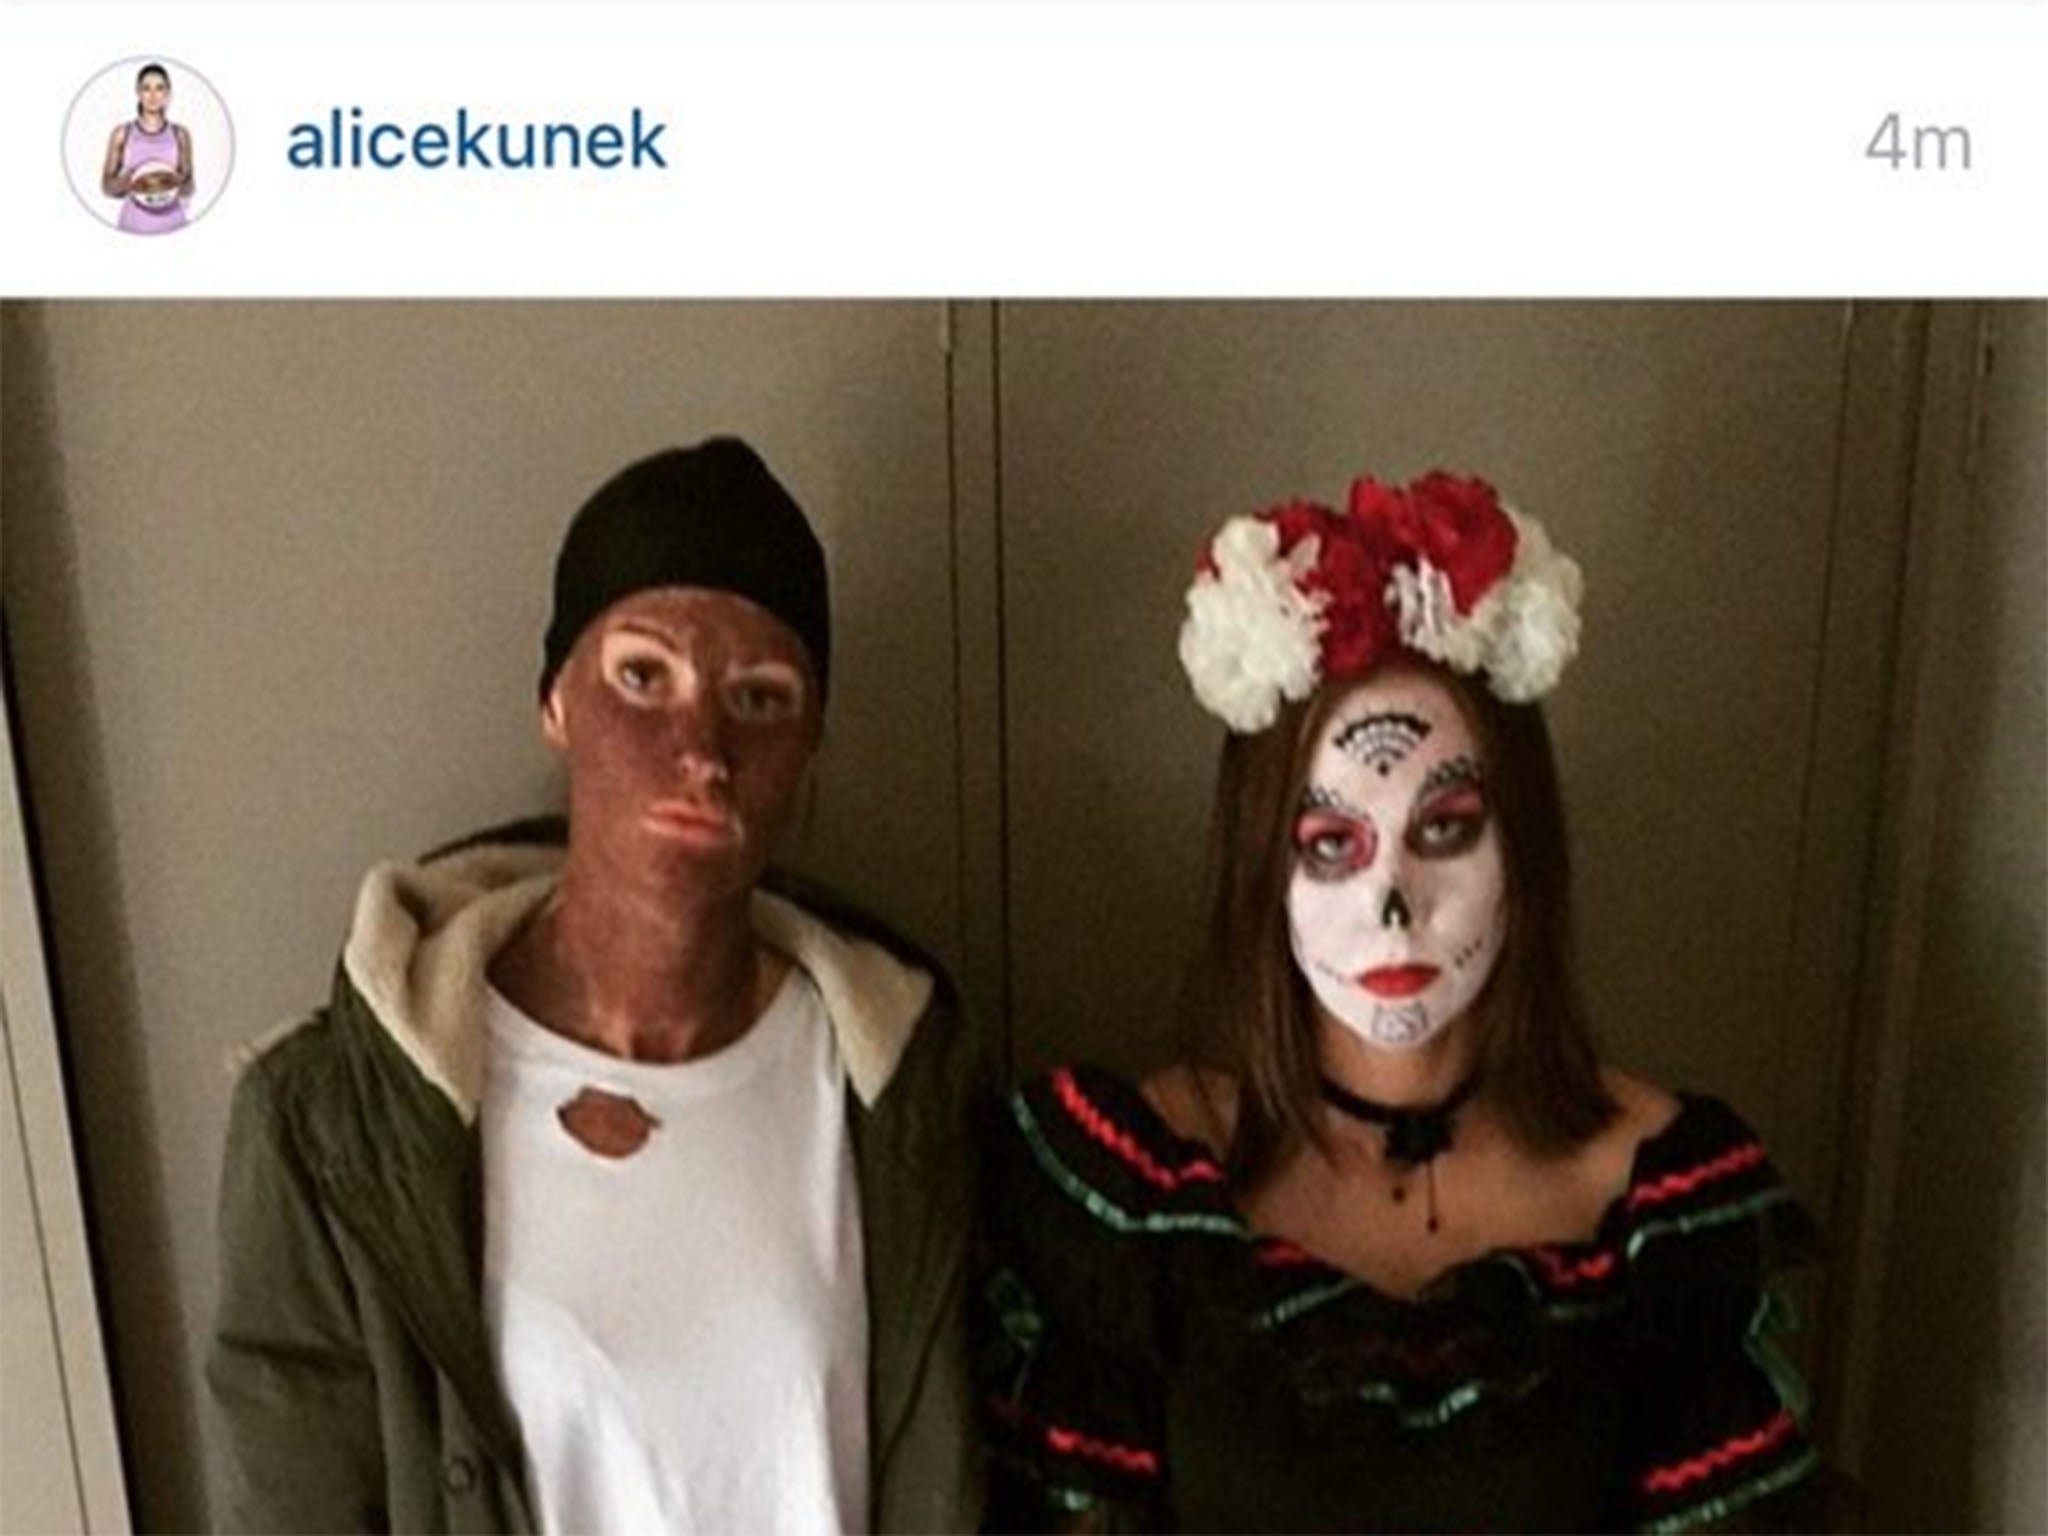 Alice Kunek came under fire for wearing blackface